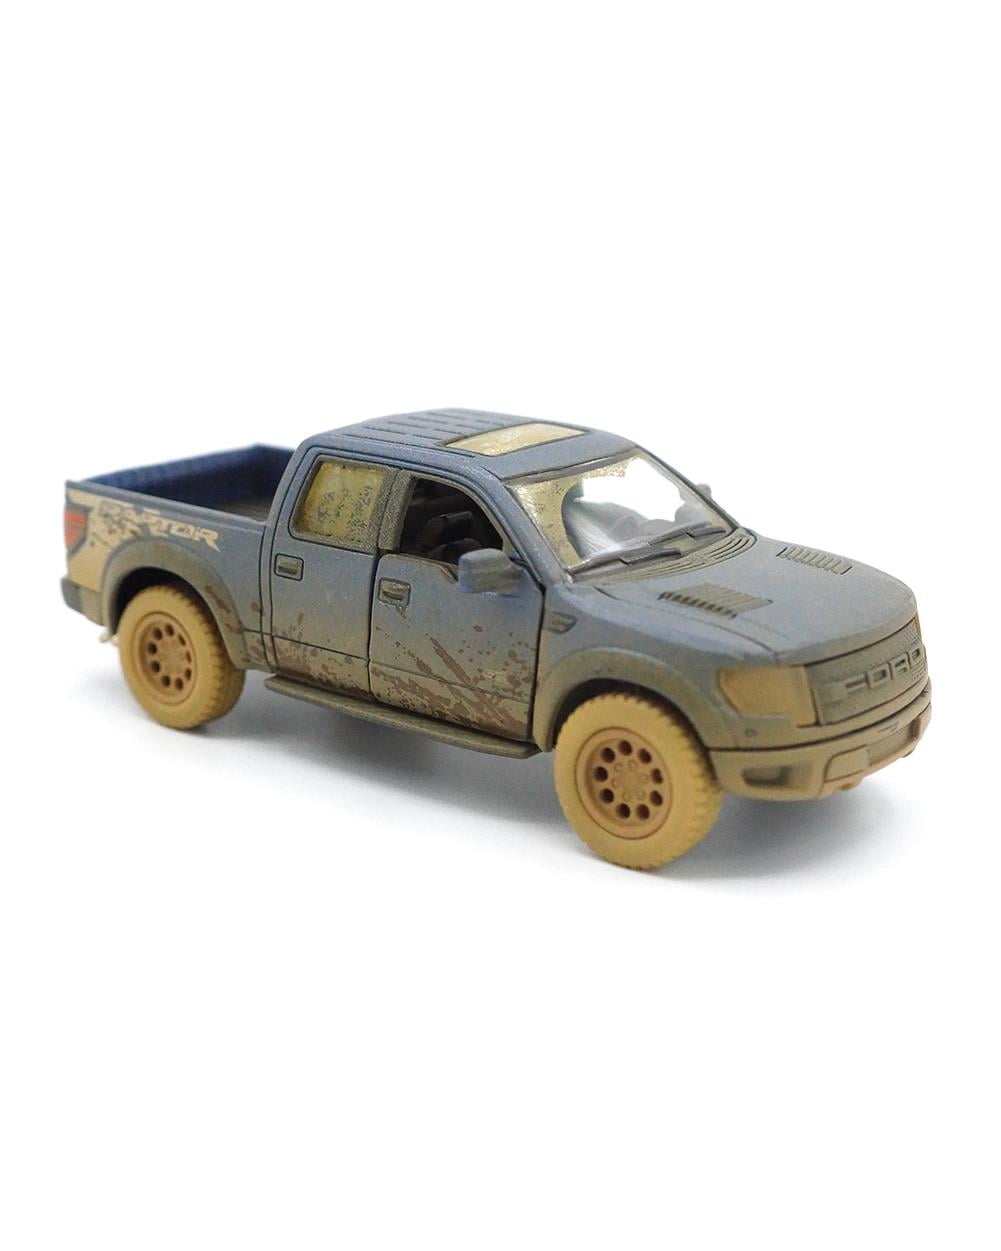 Fun Stuff Toy Cars Pickup Rescue Truck Car Diecast Model, No Box, F-150 Orange, Size: 5